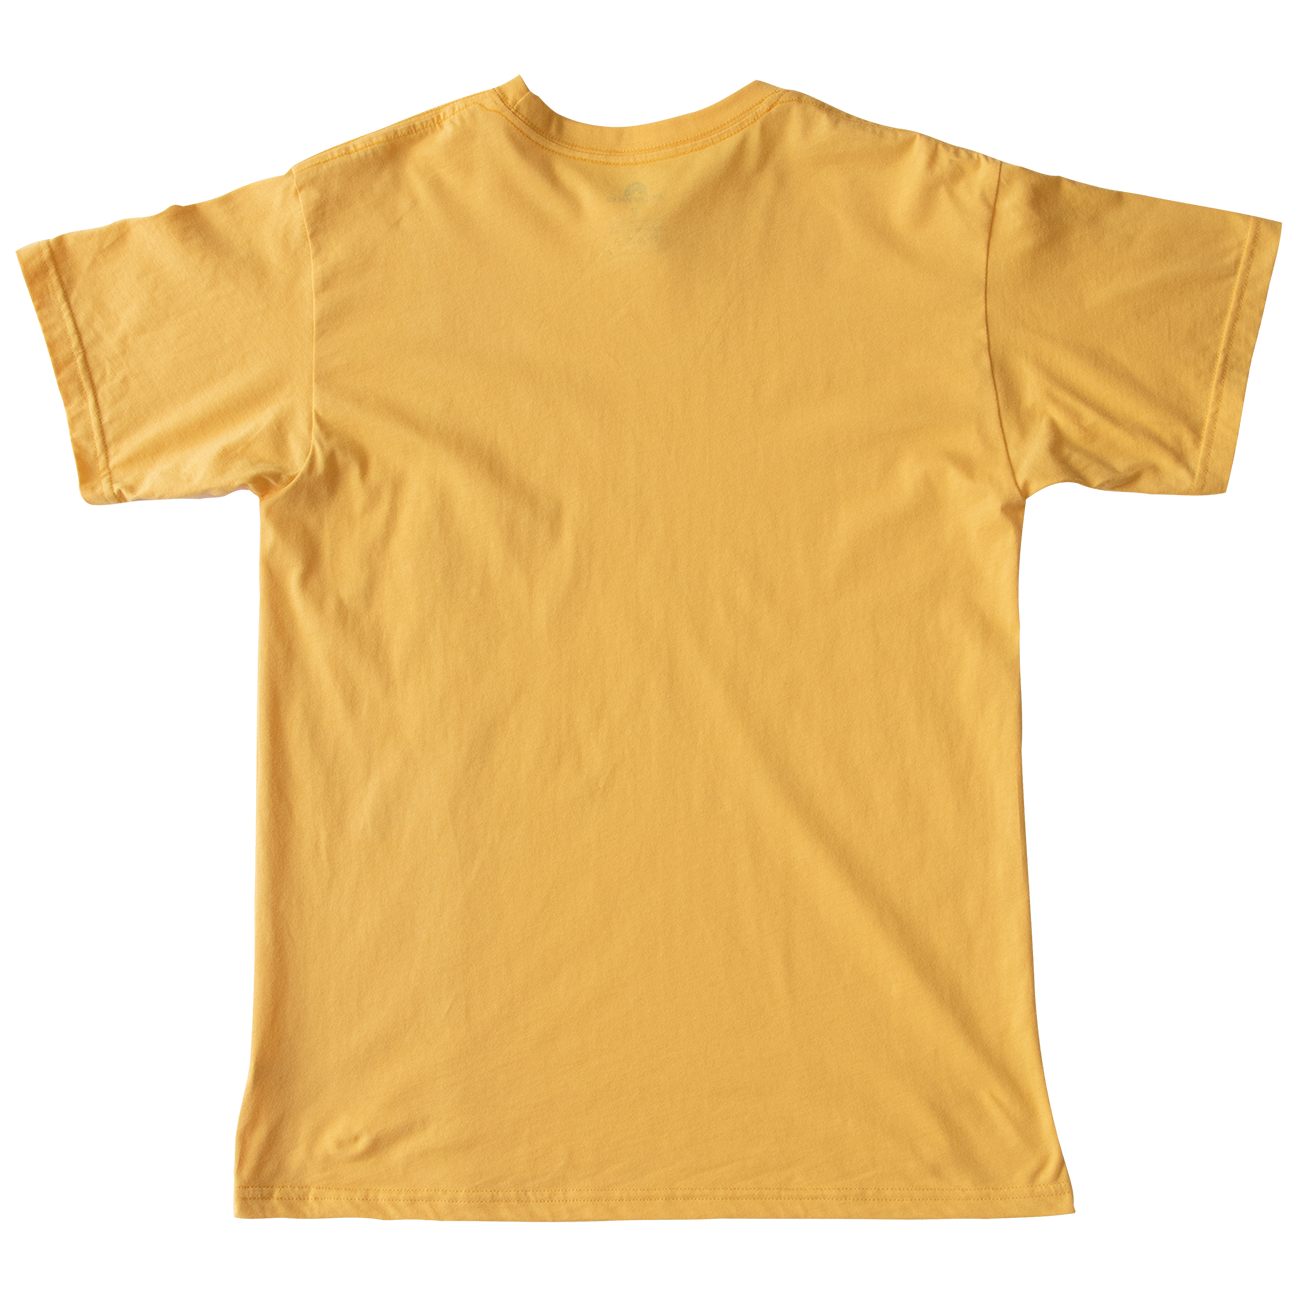 Nature Backs Short Sleeve 100% Organic Cotton T-Shirt | Minimalist Sunrise Short Sleeve made with Eco-Friendly Fibers Sustainably made in the USA 